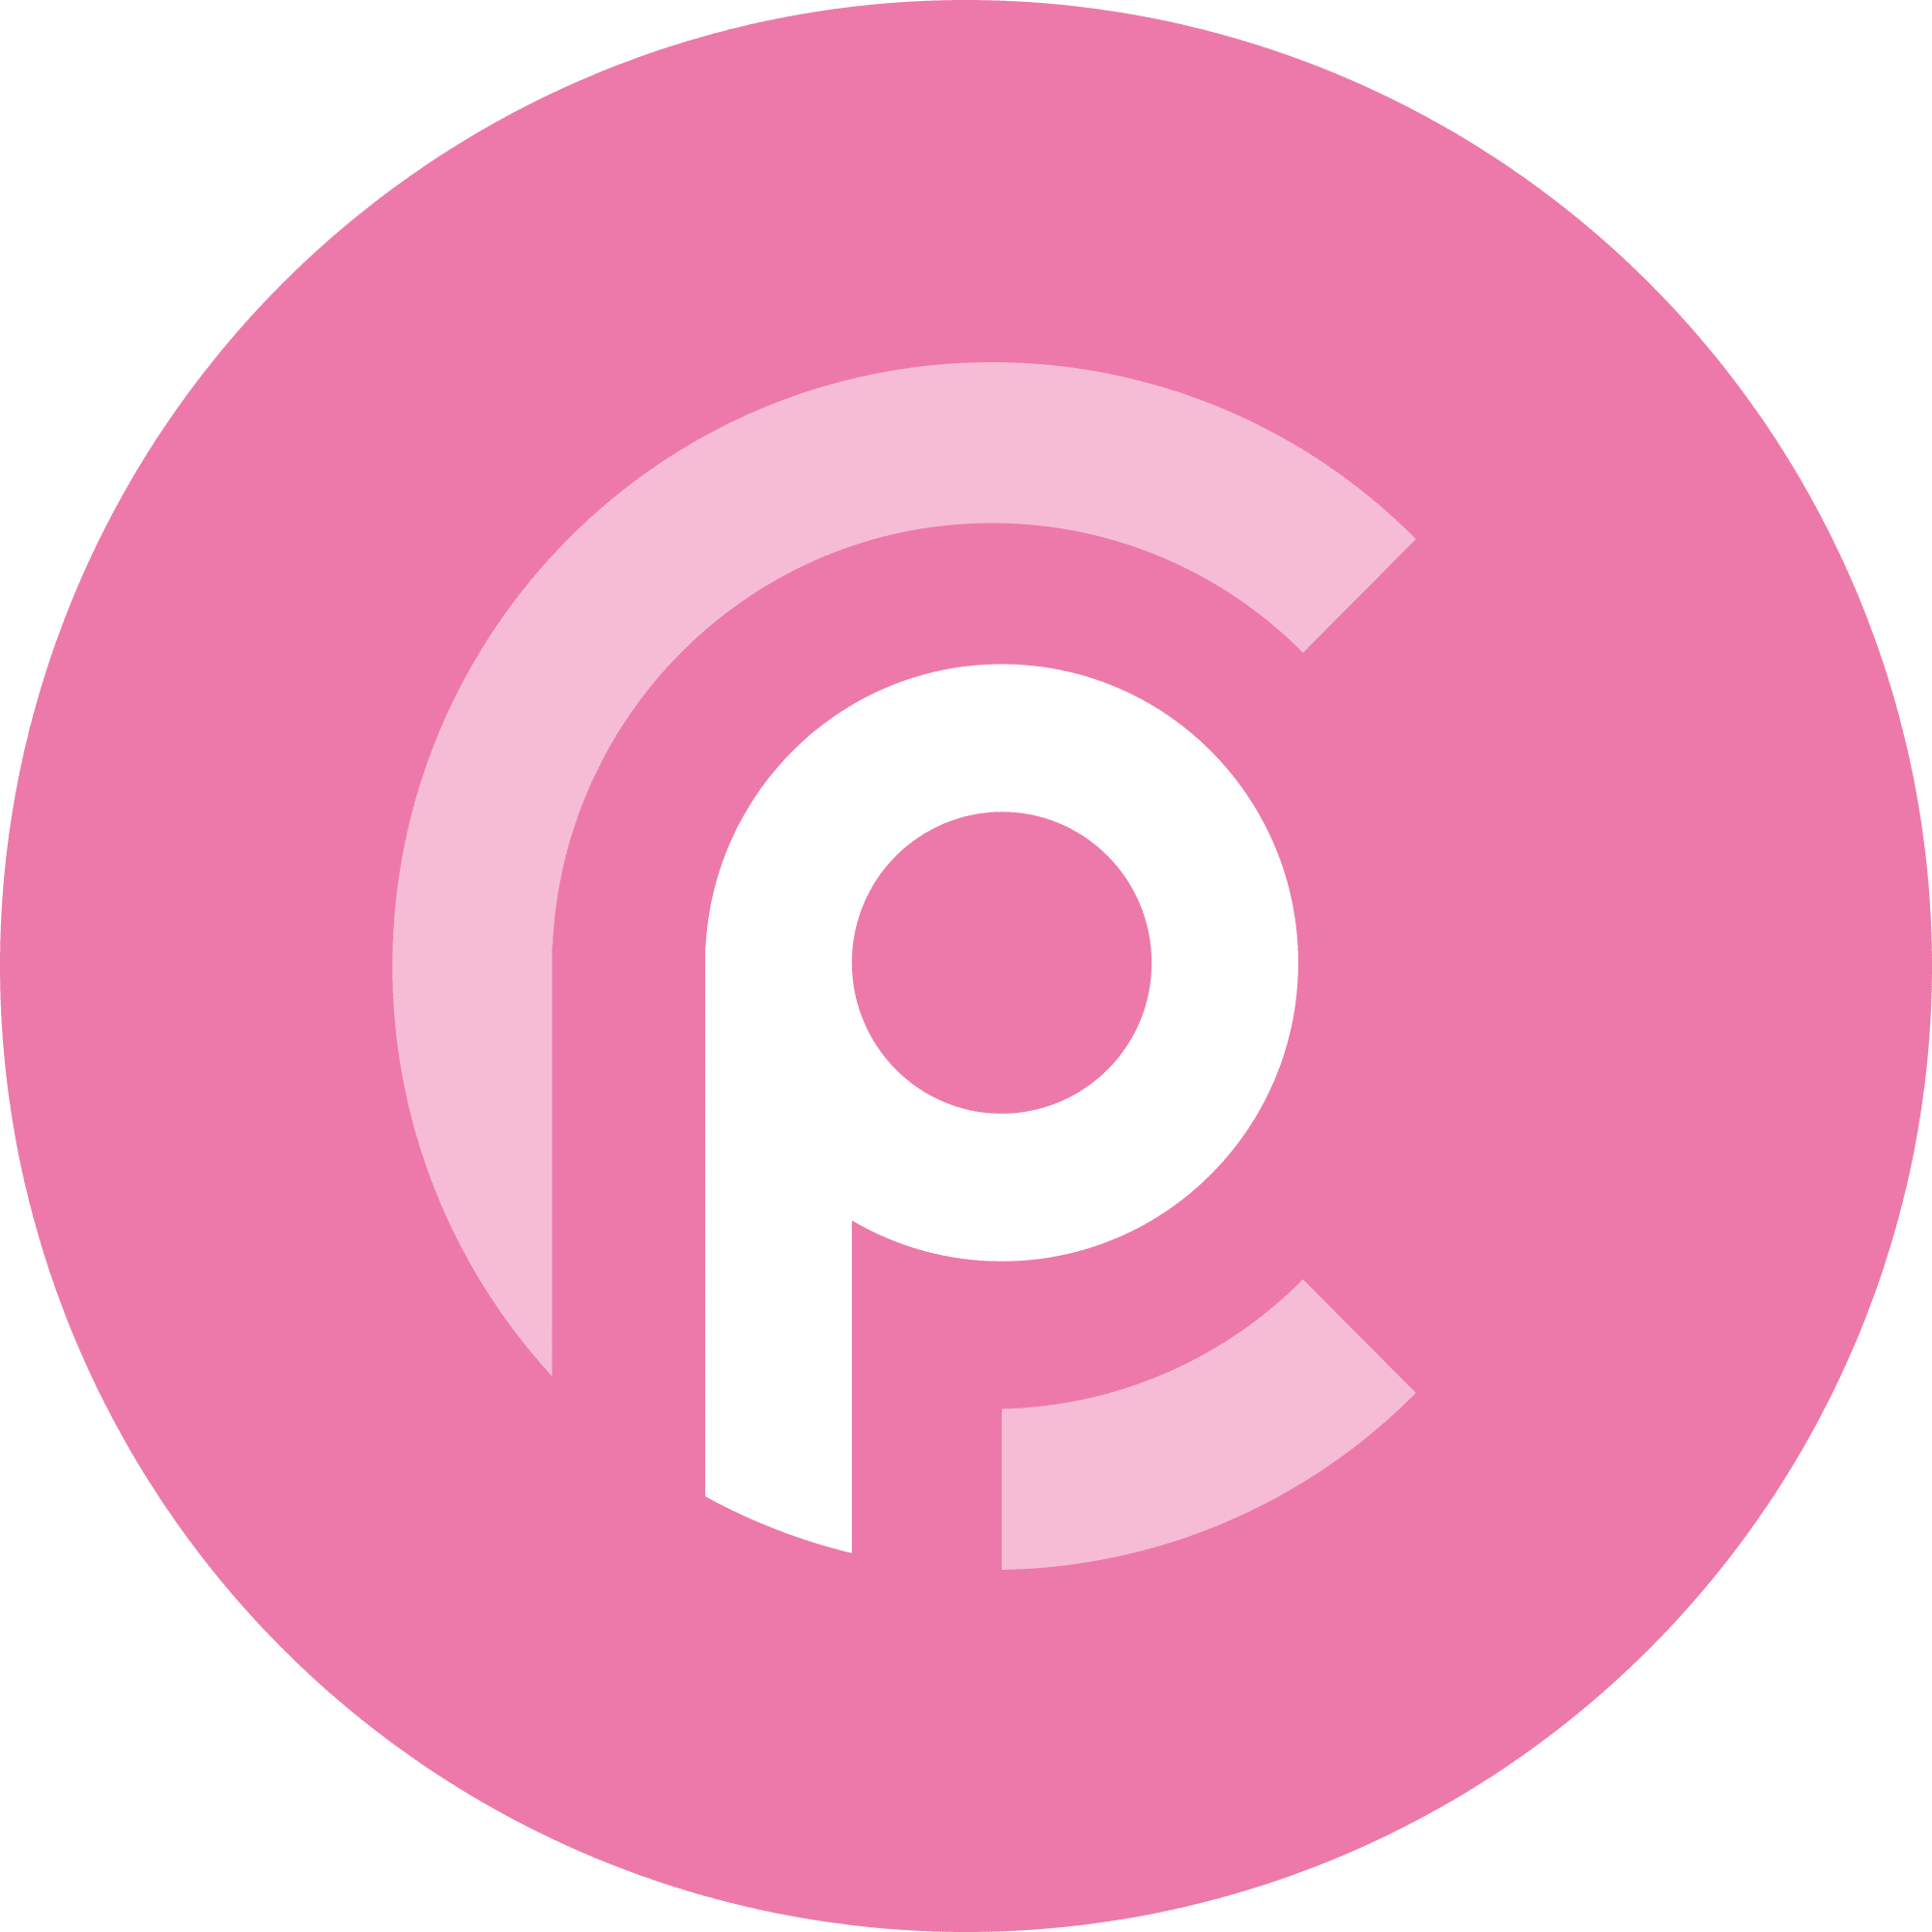 Pinkcoin logo in png format